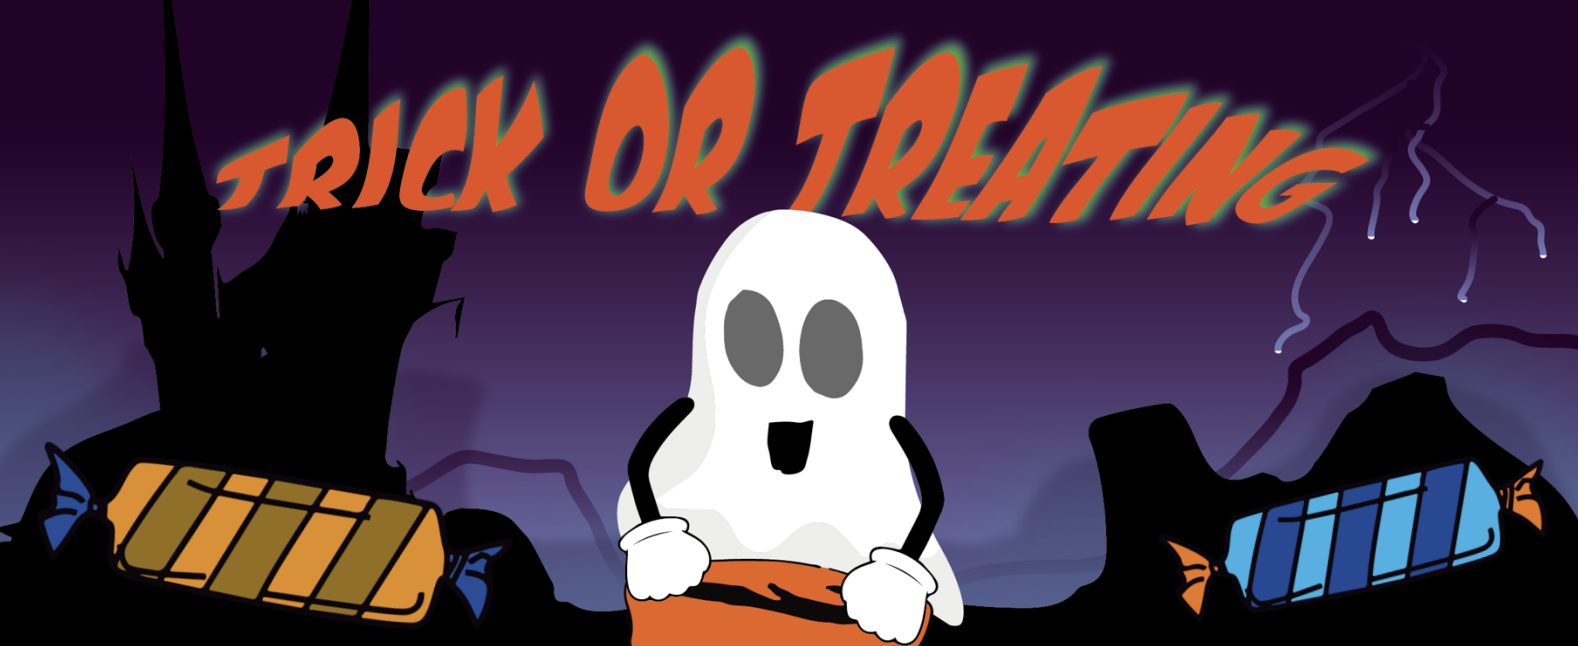 Halloween - Trick or Treating Cheat Sheet